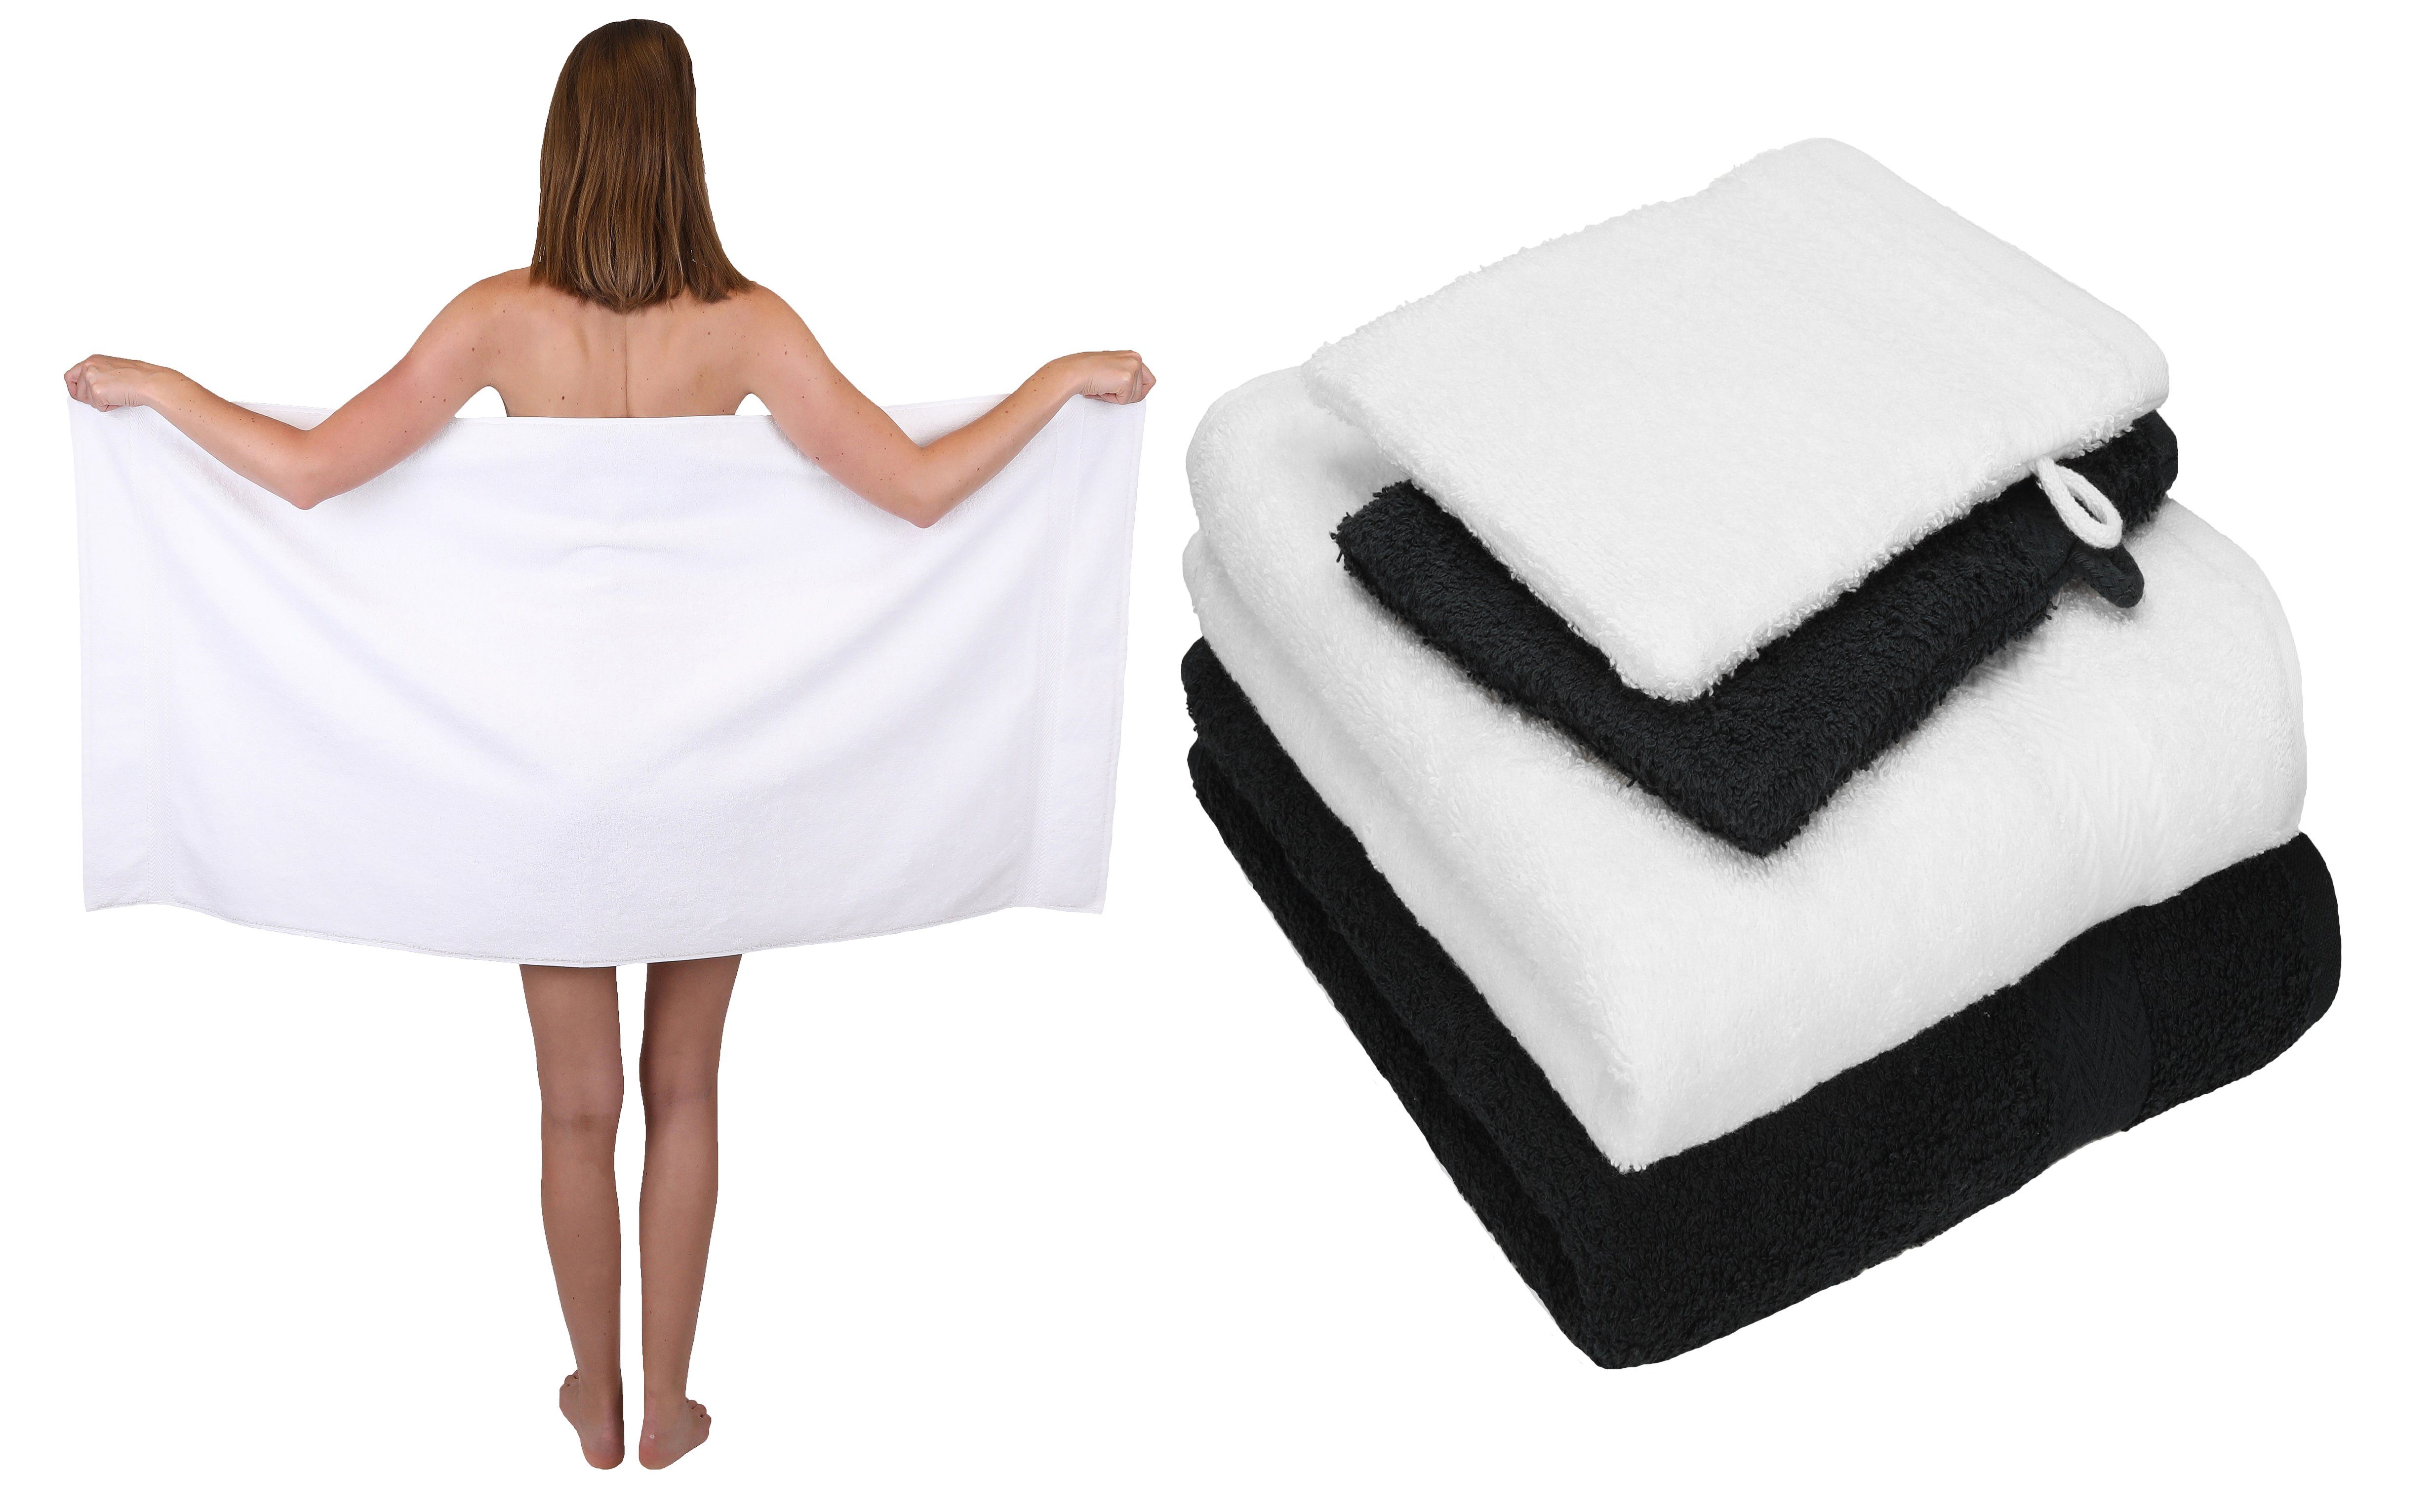 Betz Handtuch Set 5 TLG. Handtuch Set Single Pack 100% Baumwolle 1 Duschtuch 2 Handtücher 2 Waschhandschuhe, 100% Baumwolle weiß-schwarz